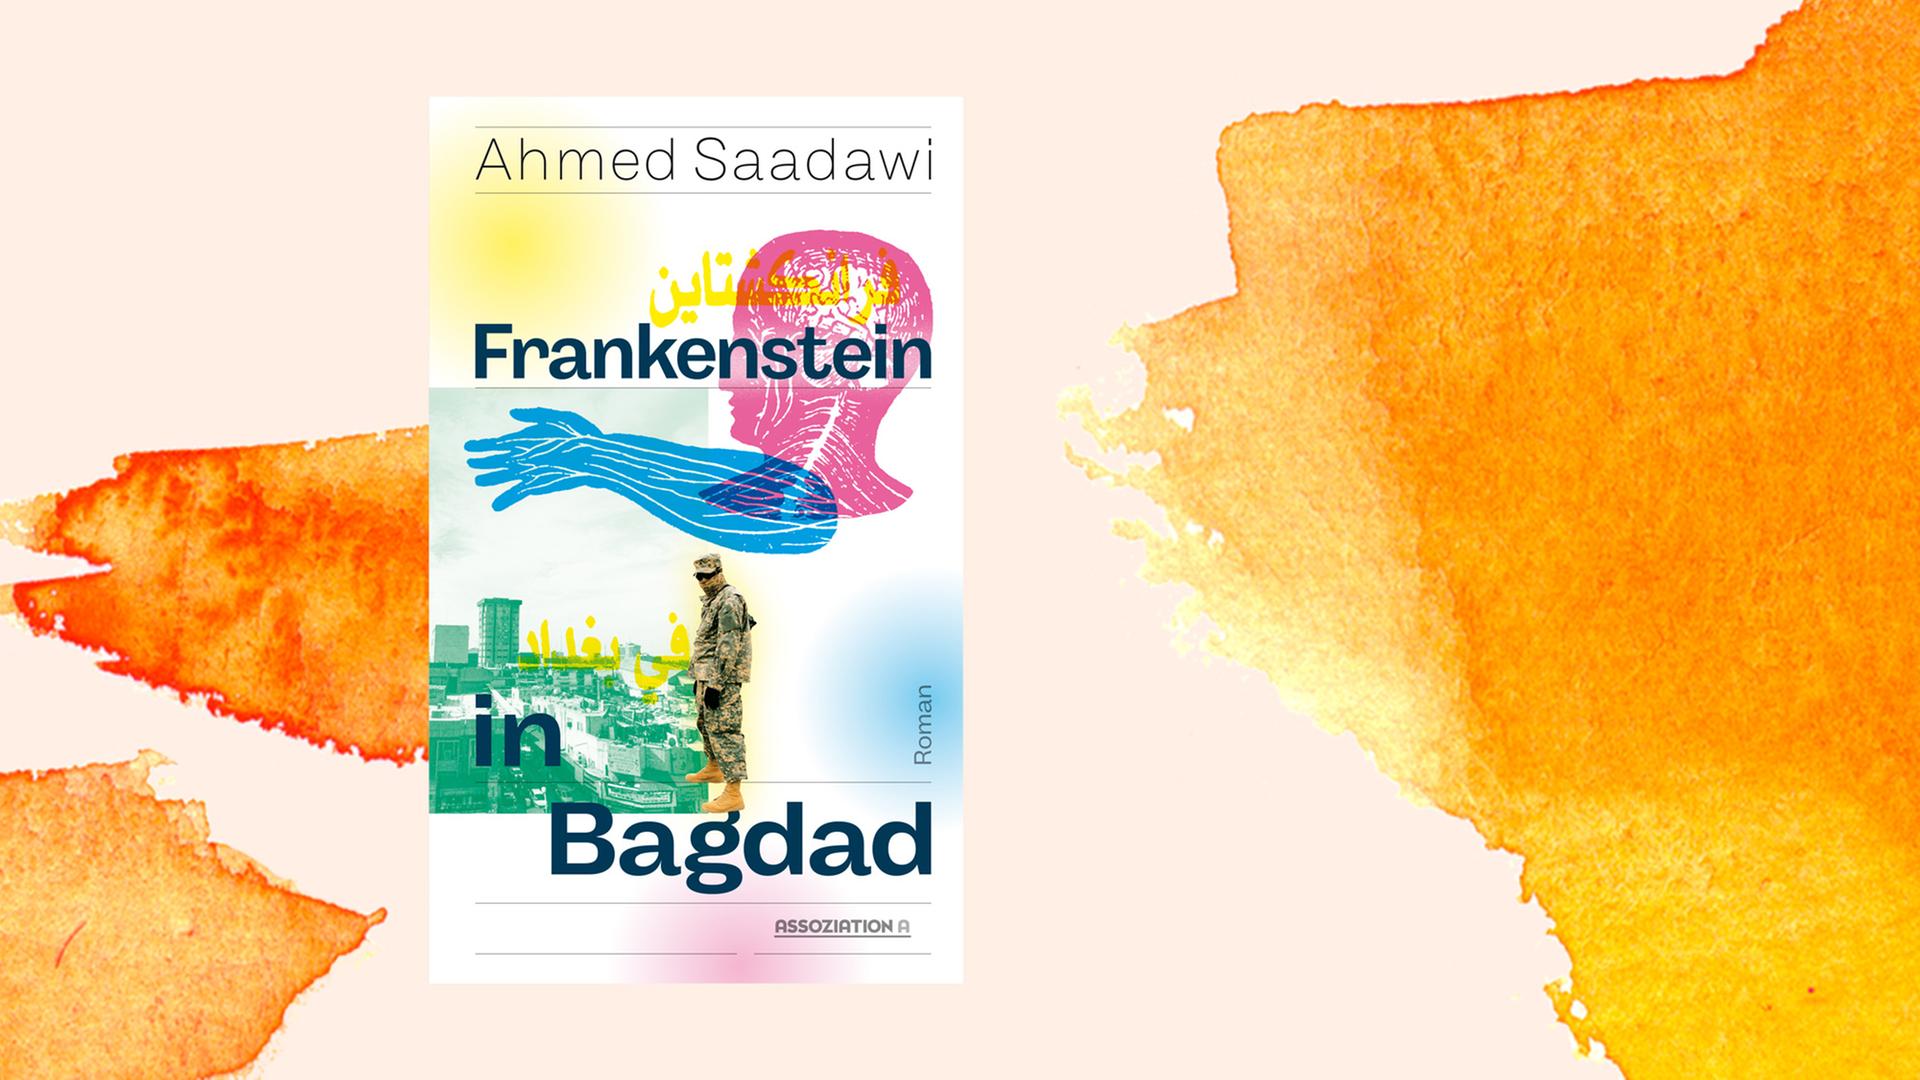 Cover des Buch "Frankenstein in Bagdad" von Ahmed Saadawi